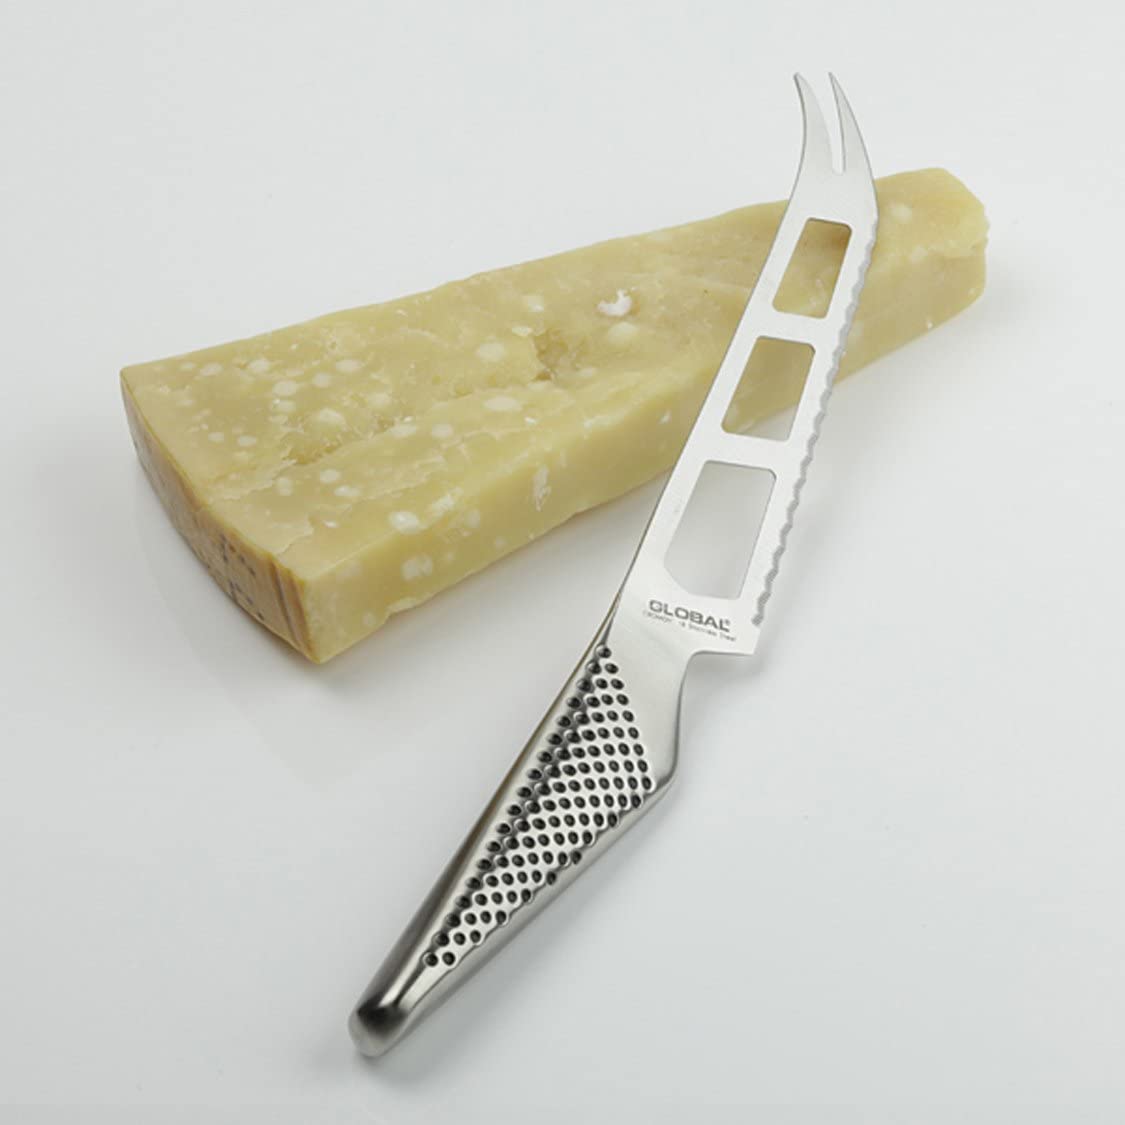 Yoshikin Global Cheese Knife GS-10